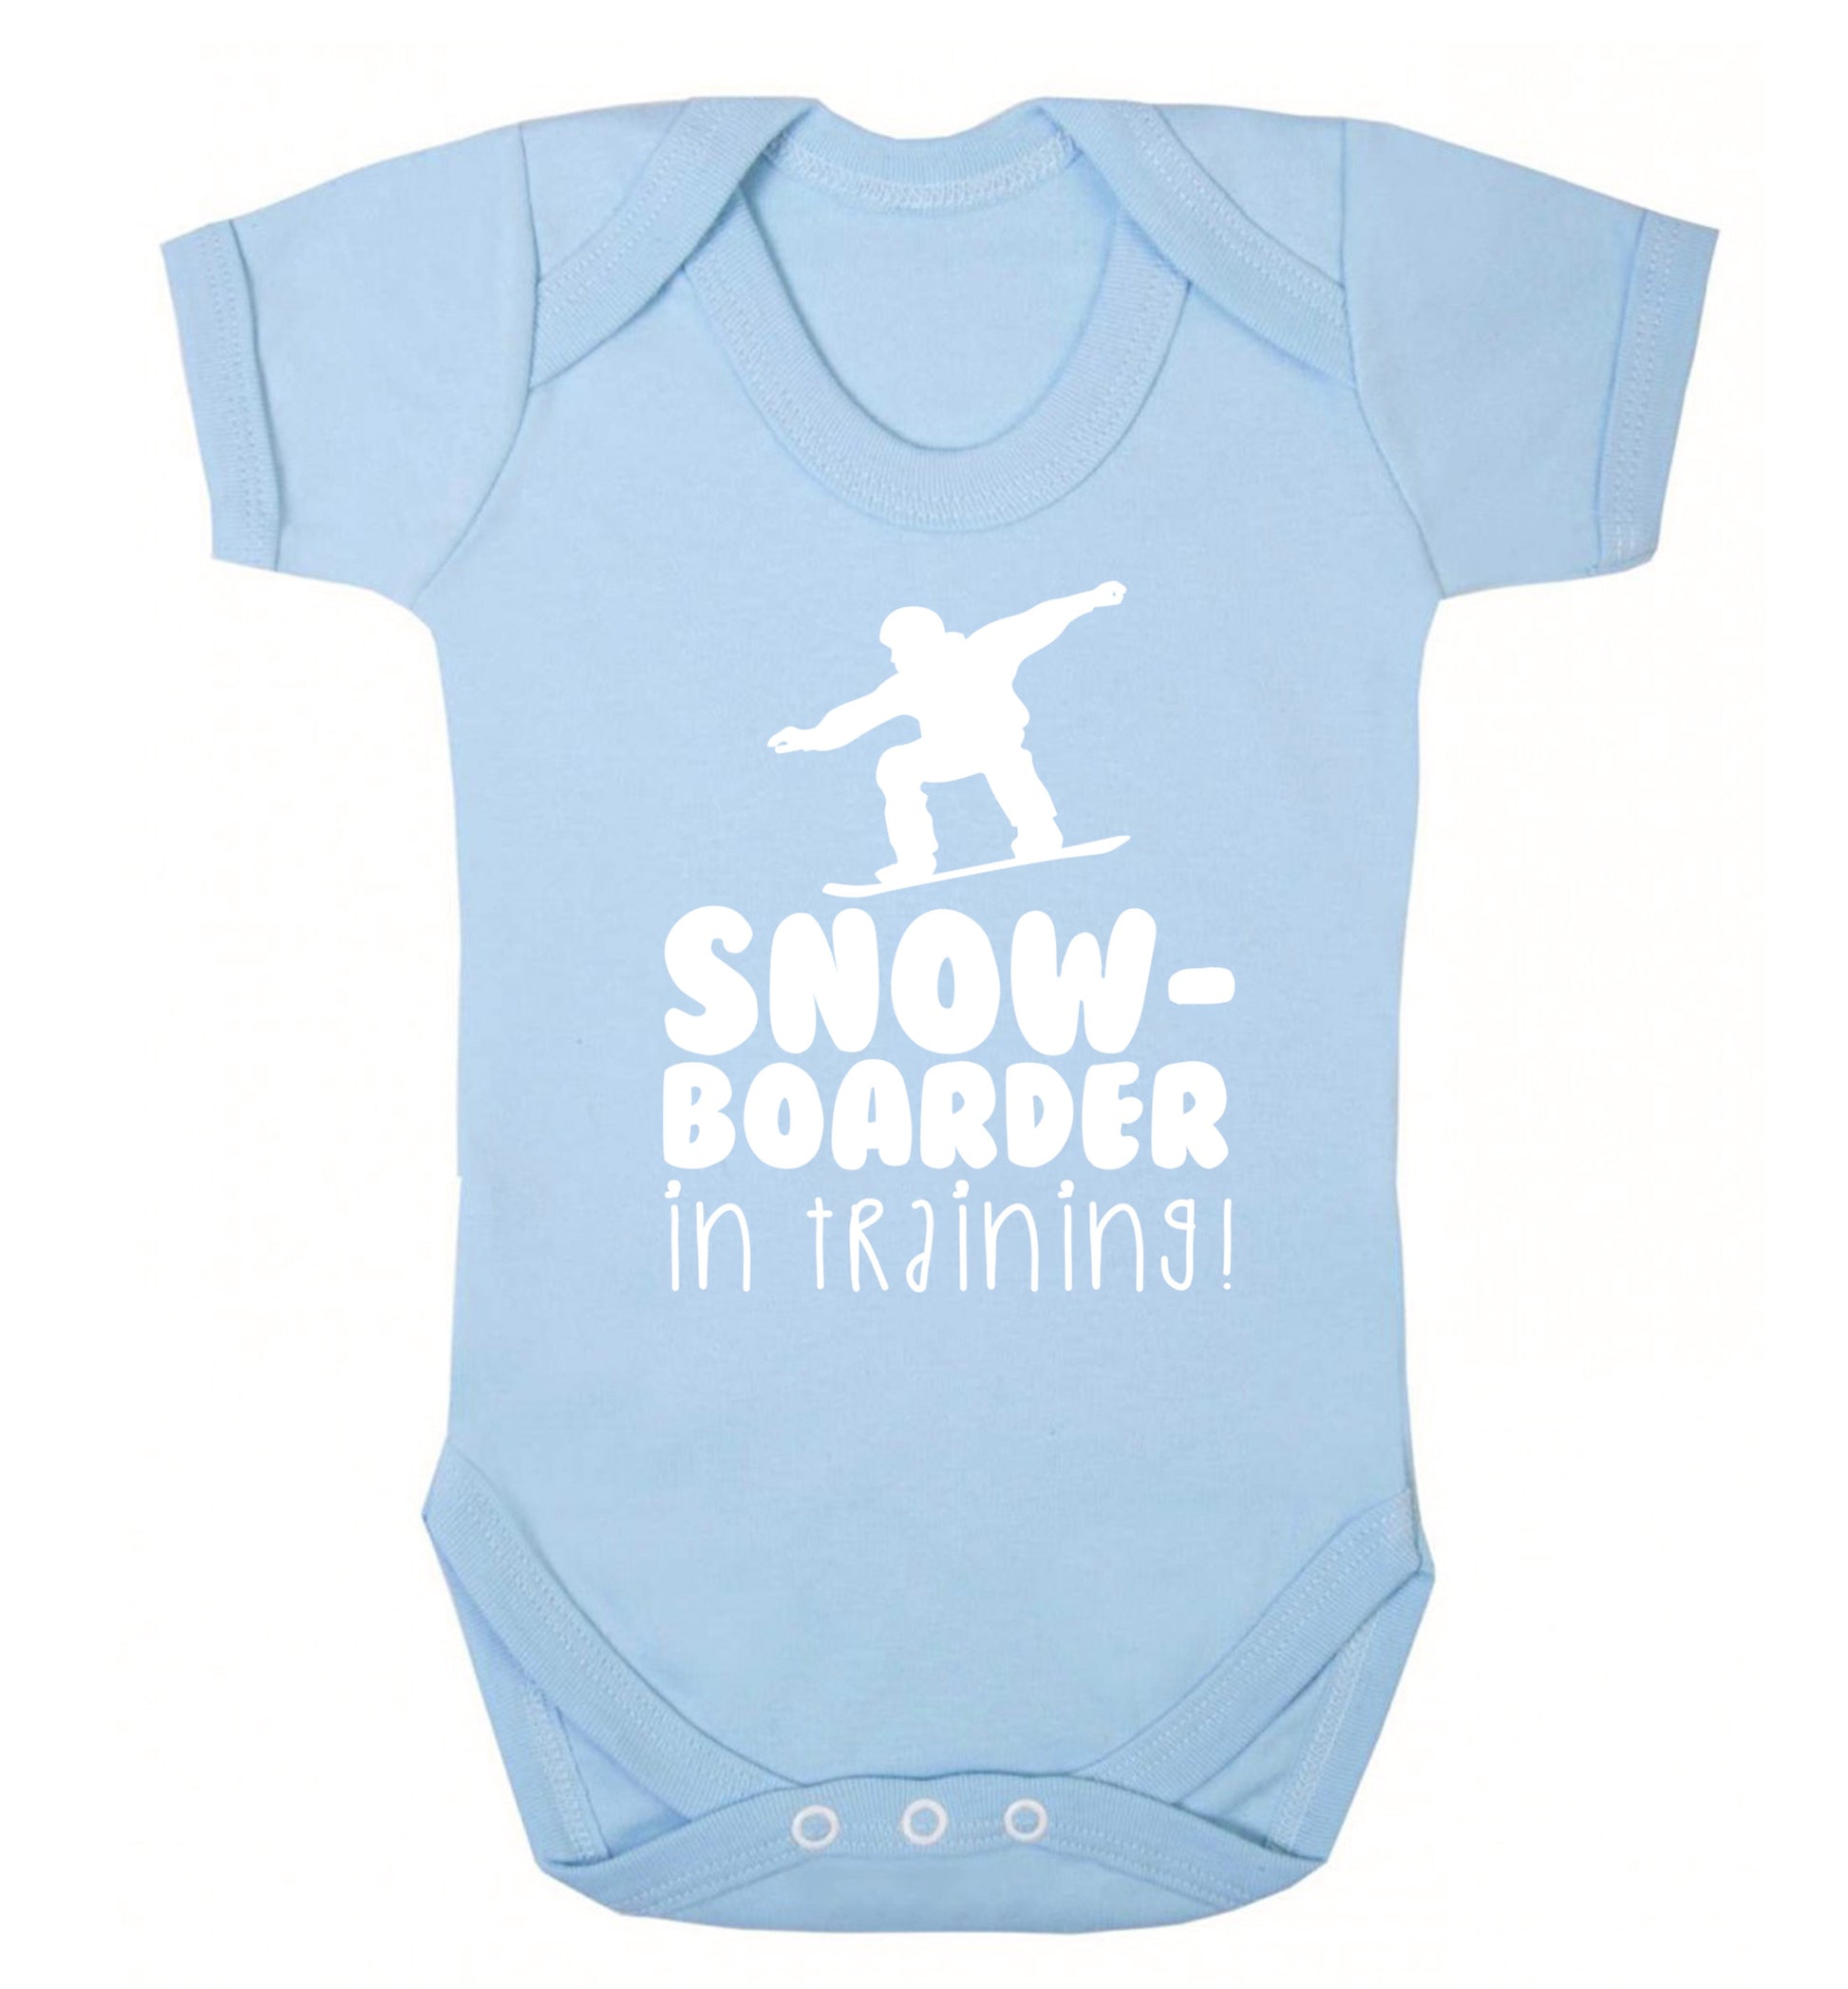 Snowboarder in training Baby Vest pale blue 18-24 months